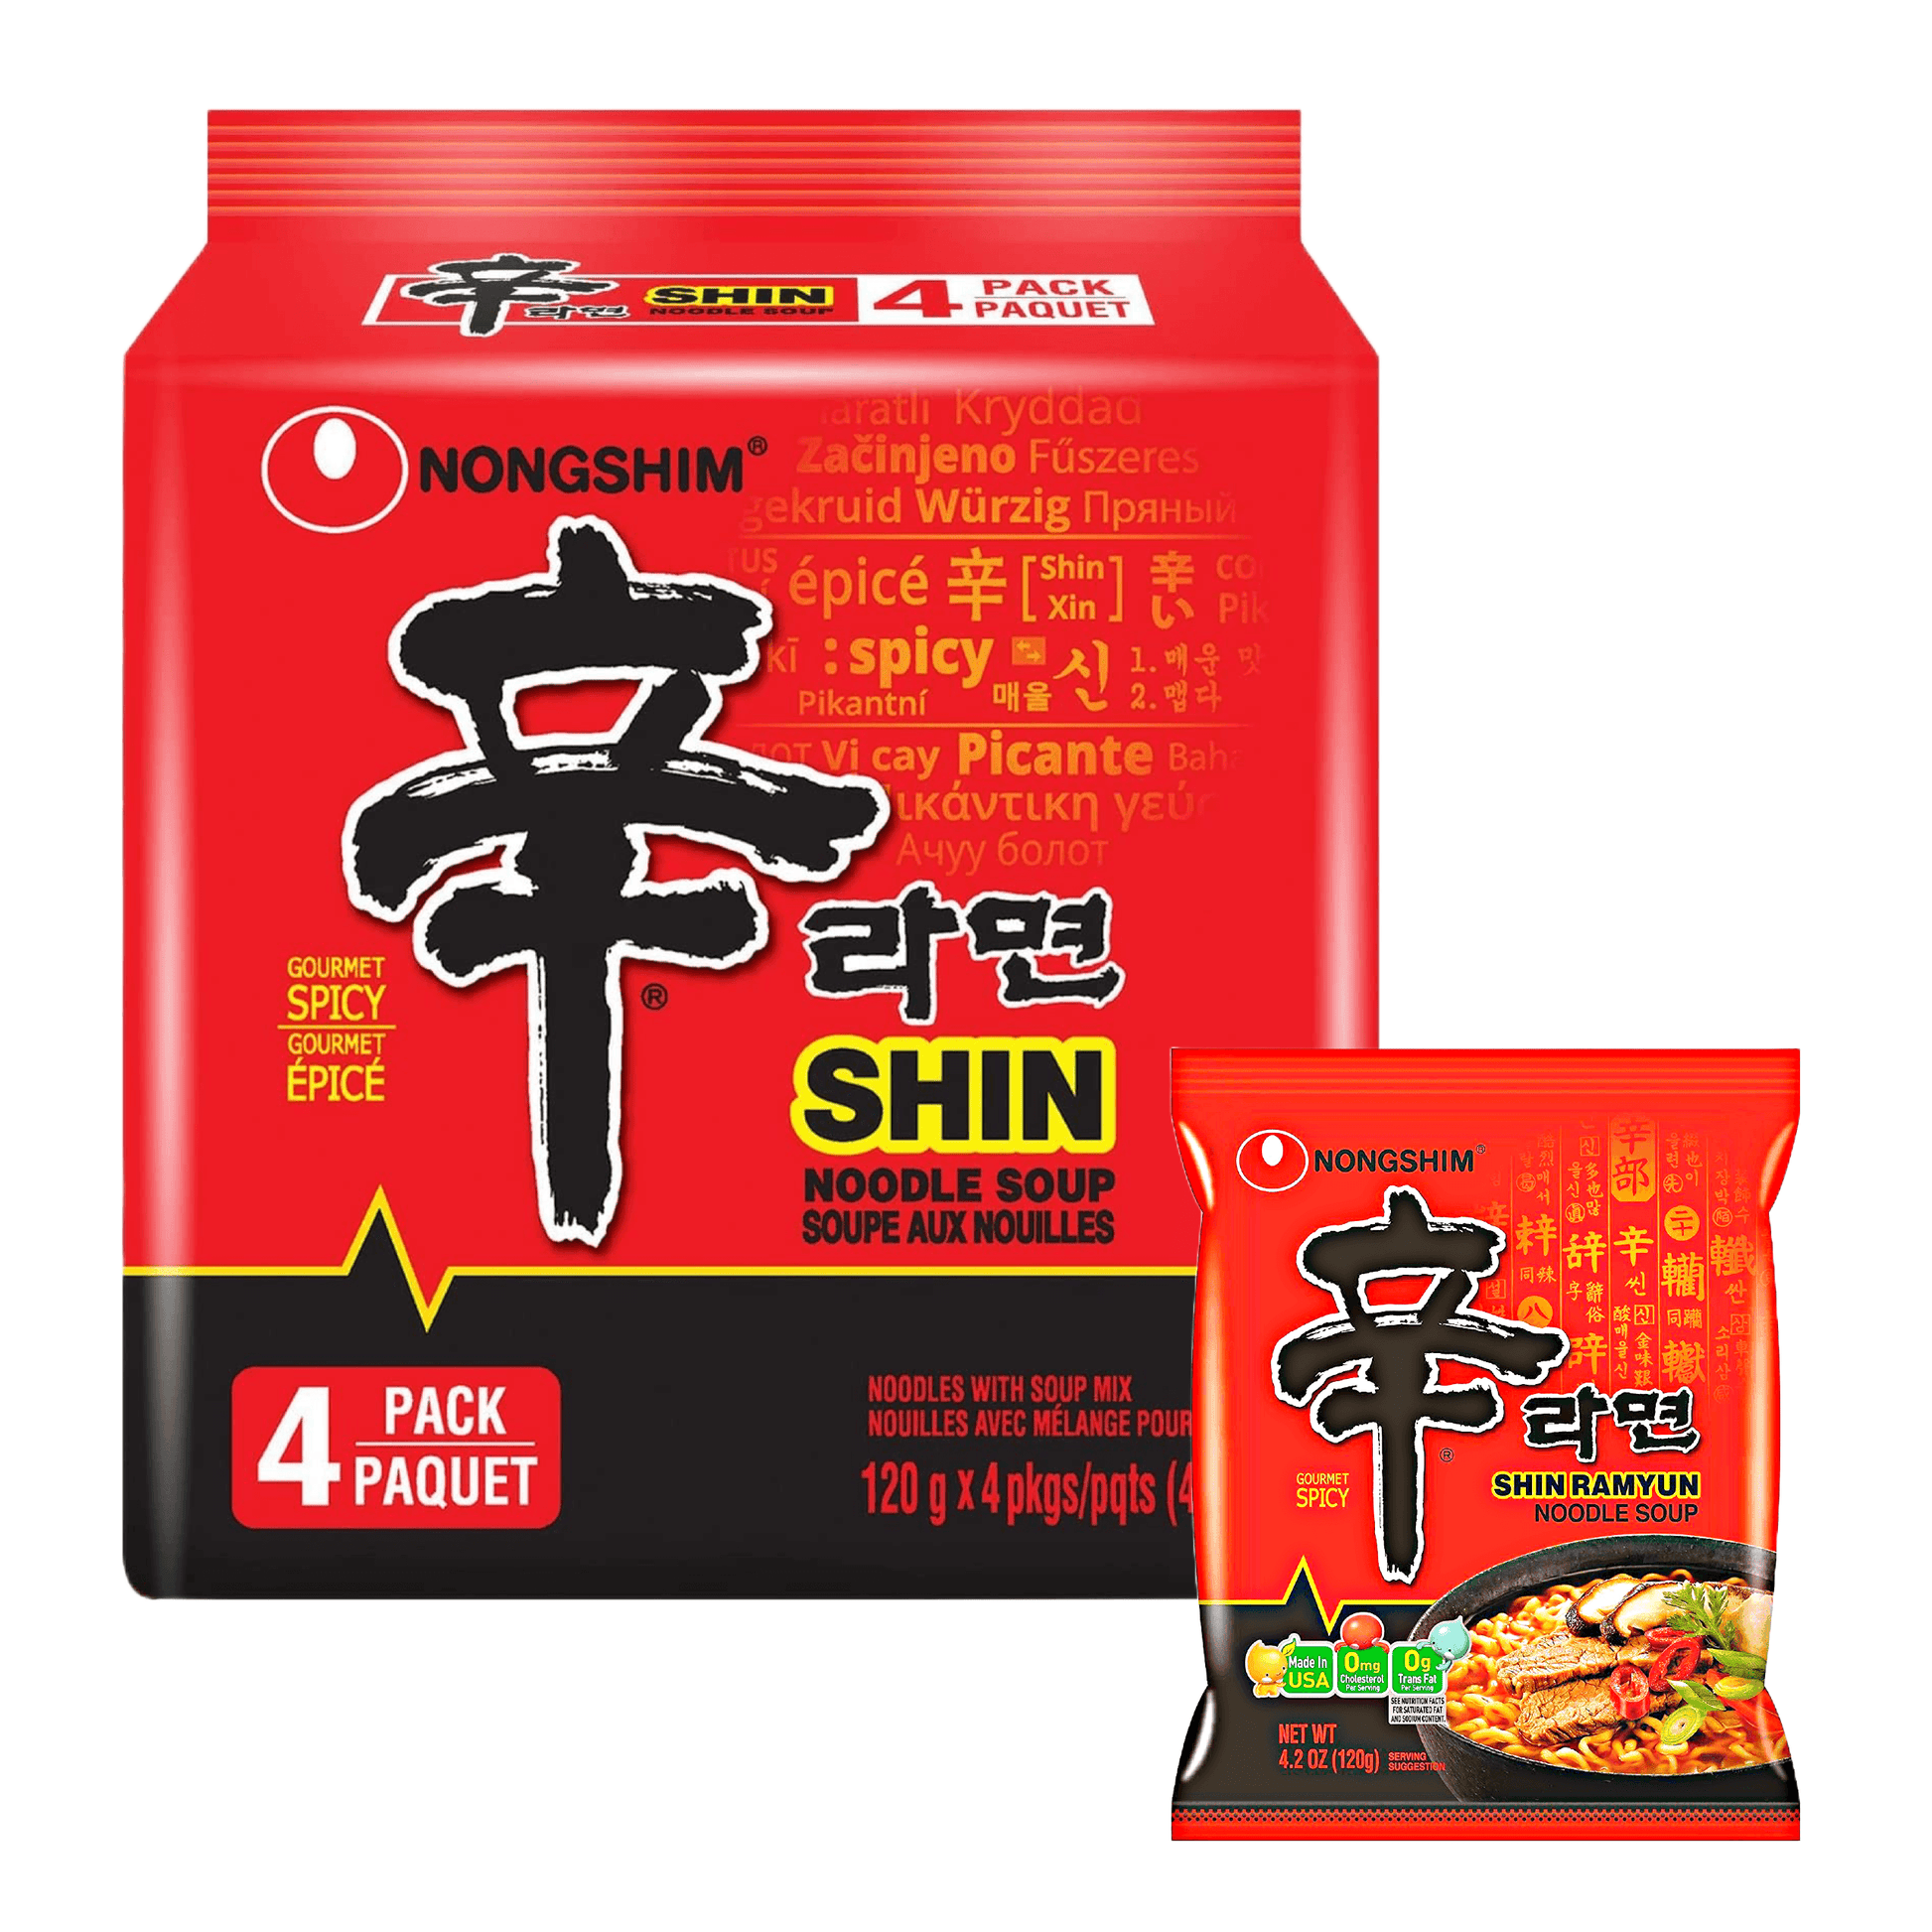 Nongshim Spicy Shin Ramyun Noodles 4x120g - The Snacks Box - Asian Snacks Store - The Snacks Box - Korean Snack - Japanese Snack